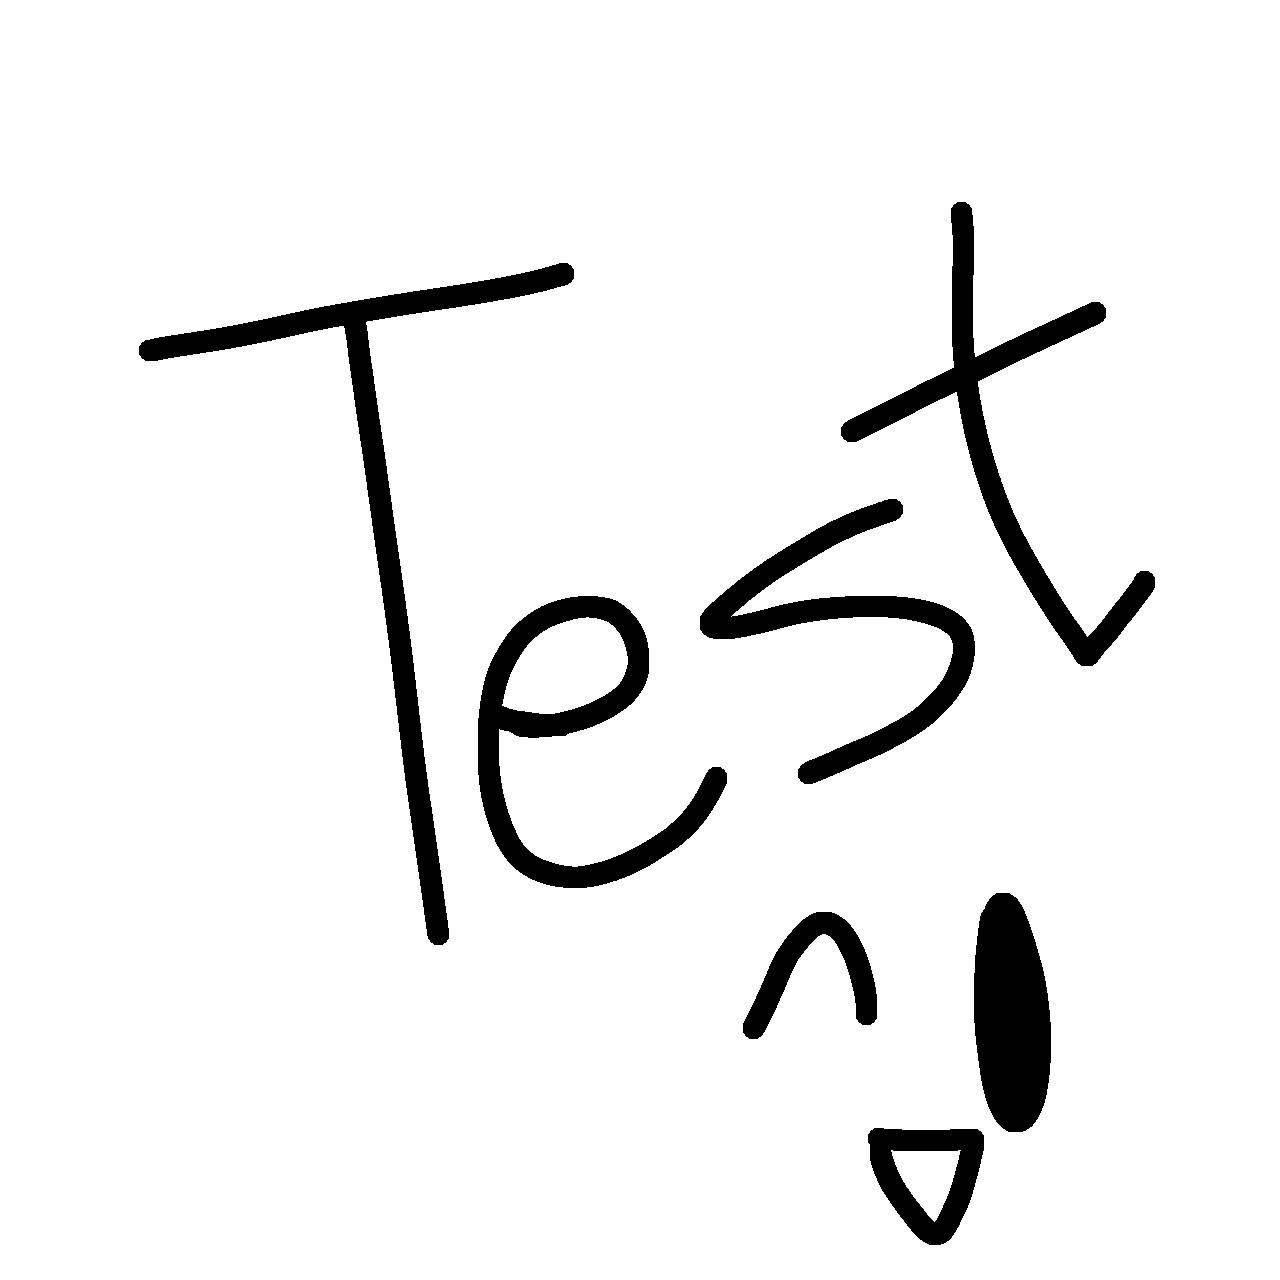 Roblox Test Logo #2 by PetrifiedPenguinLogo on DeviantArt